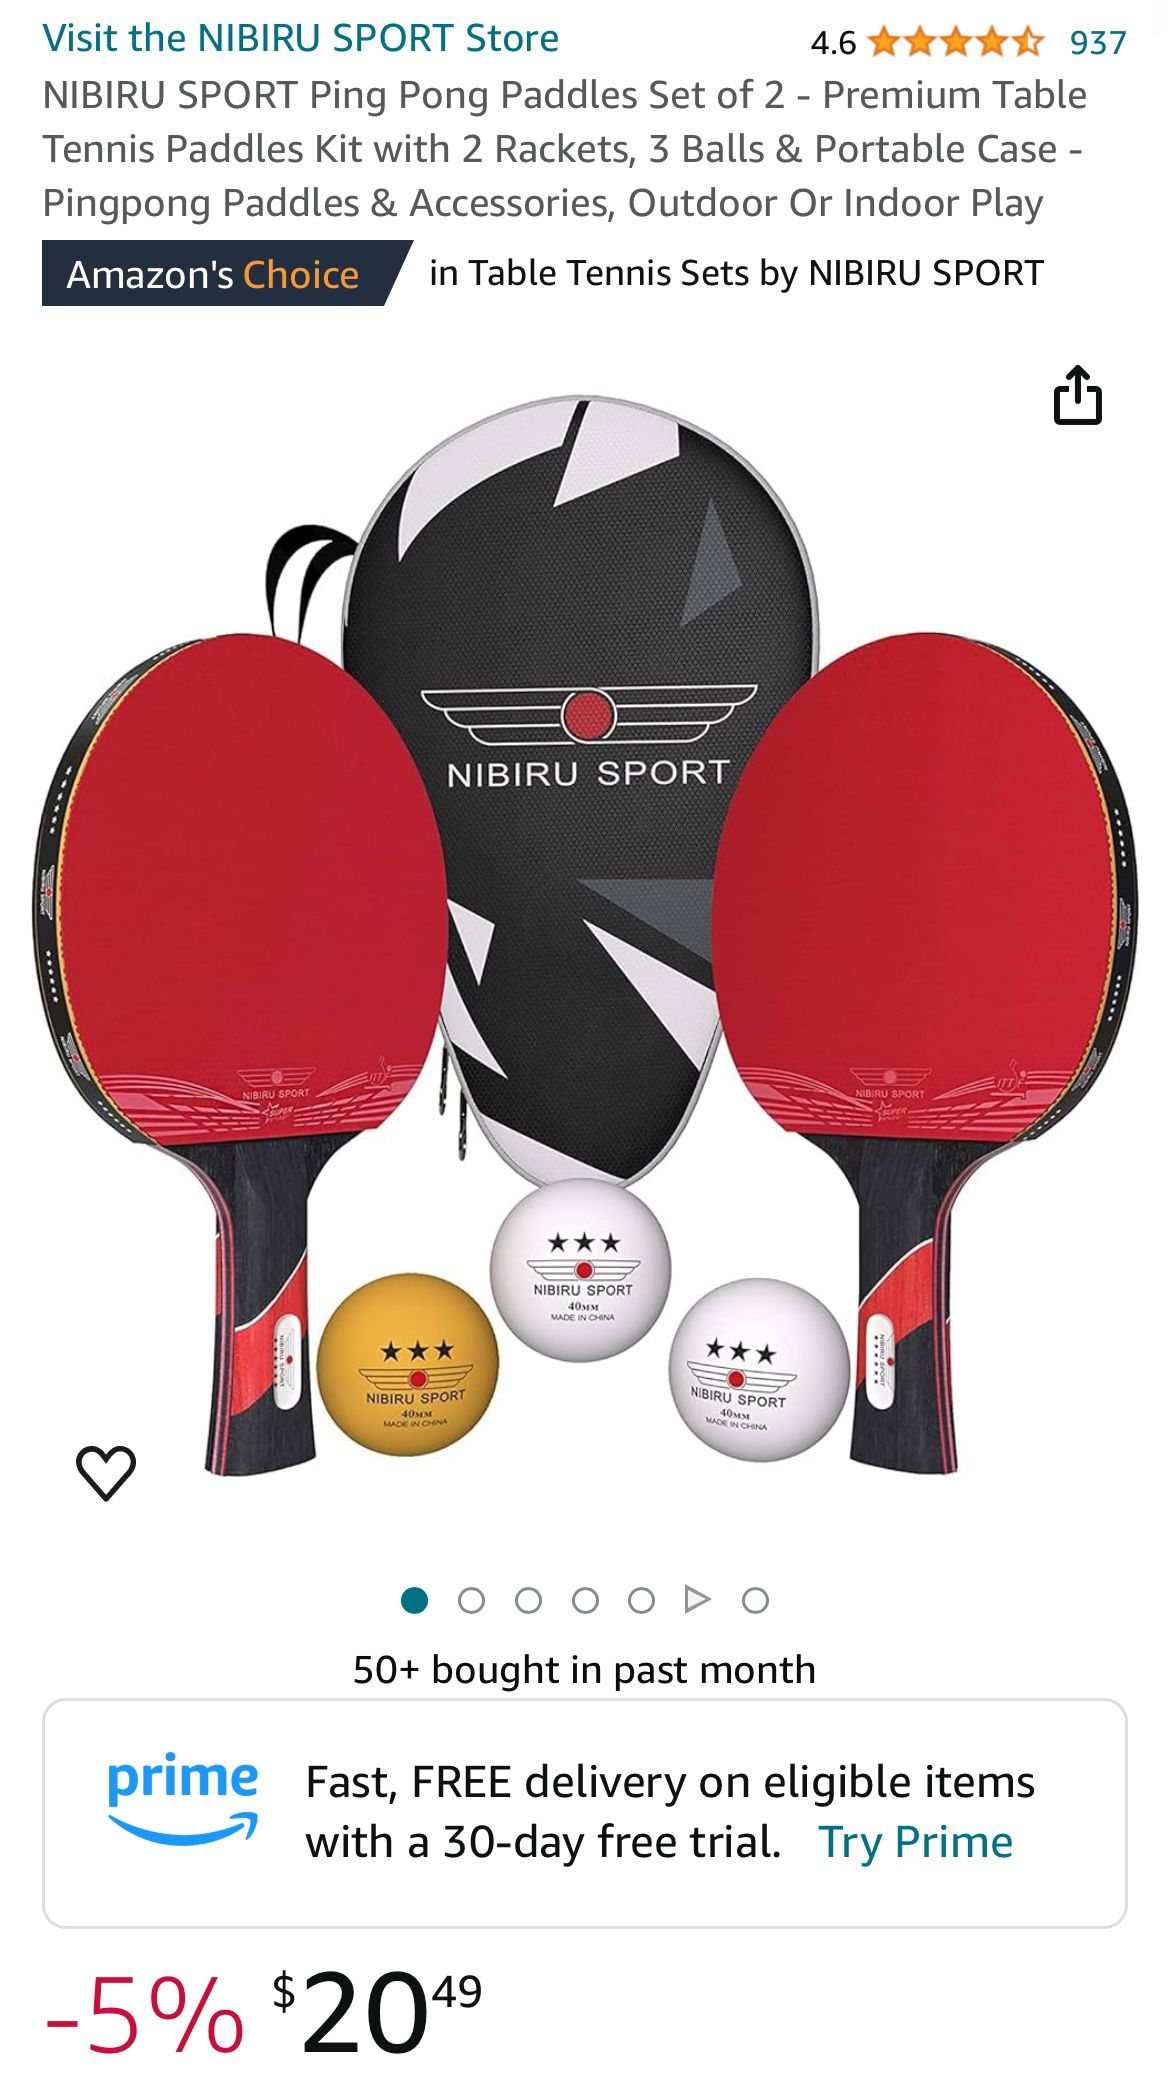 NIBIRU SPORT Ping Pong Paddles Set of 2 - Premium Table Tennis Paddles Kit with 2 Rackets, 3 Balls & Portable Case - Pingpong Paddles & Accessories, O